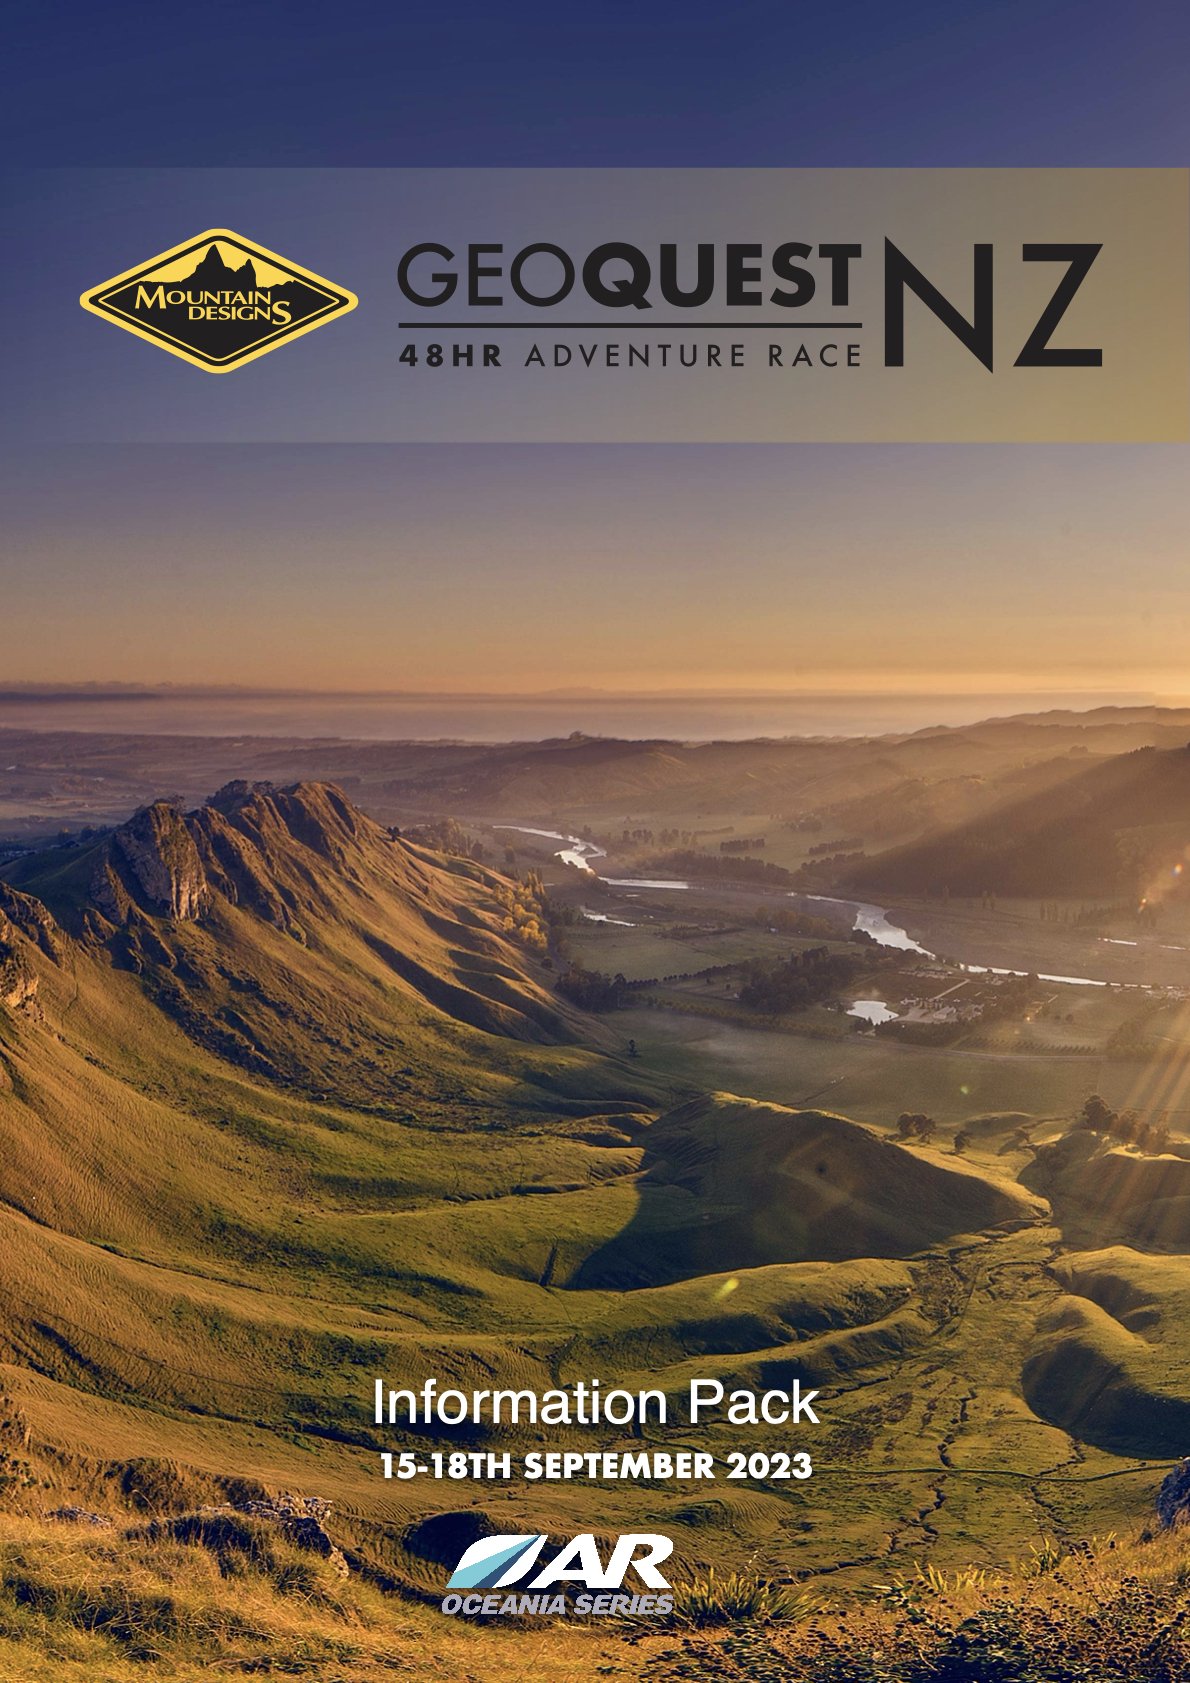 GeoQuest NZ 2023 Information Kit Now Available! — Mountain Designs GeoQuest Adventure Race